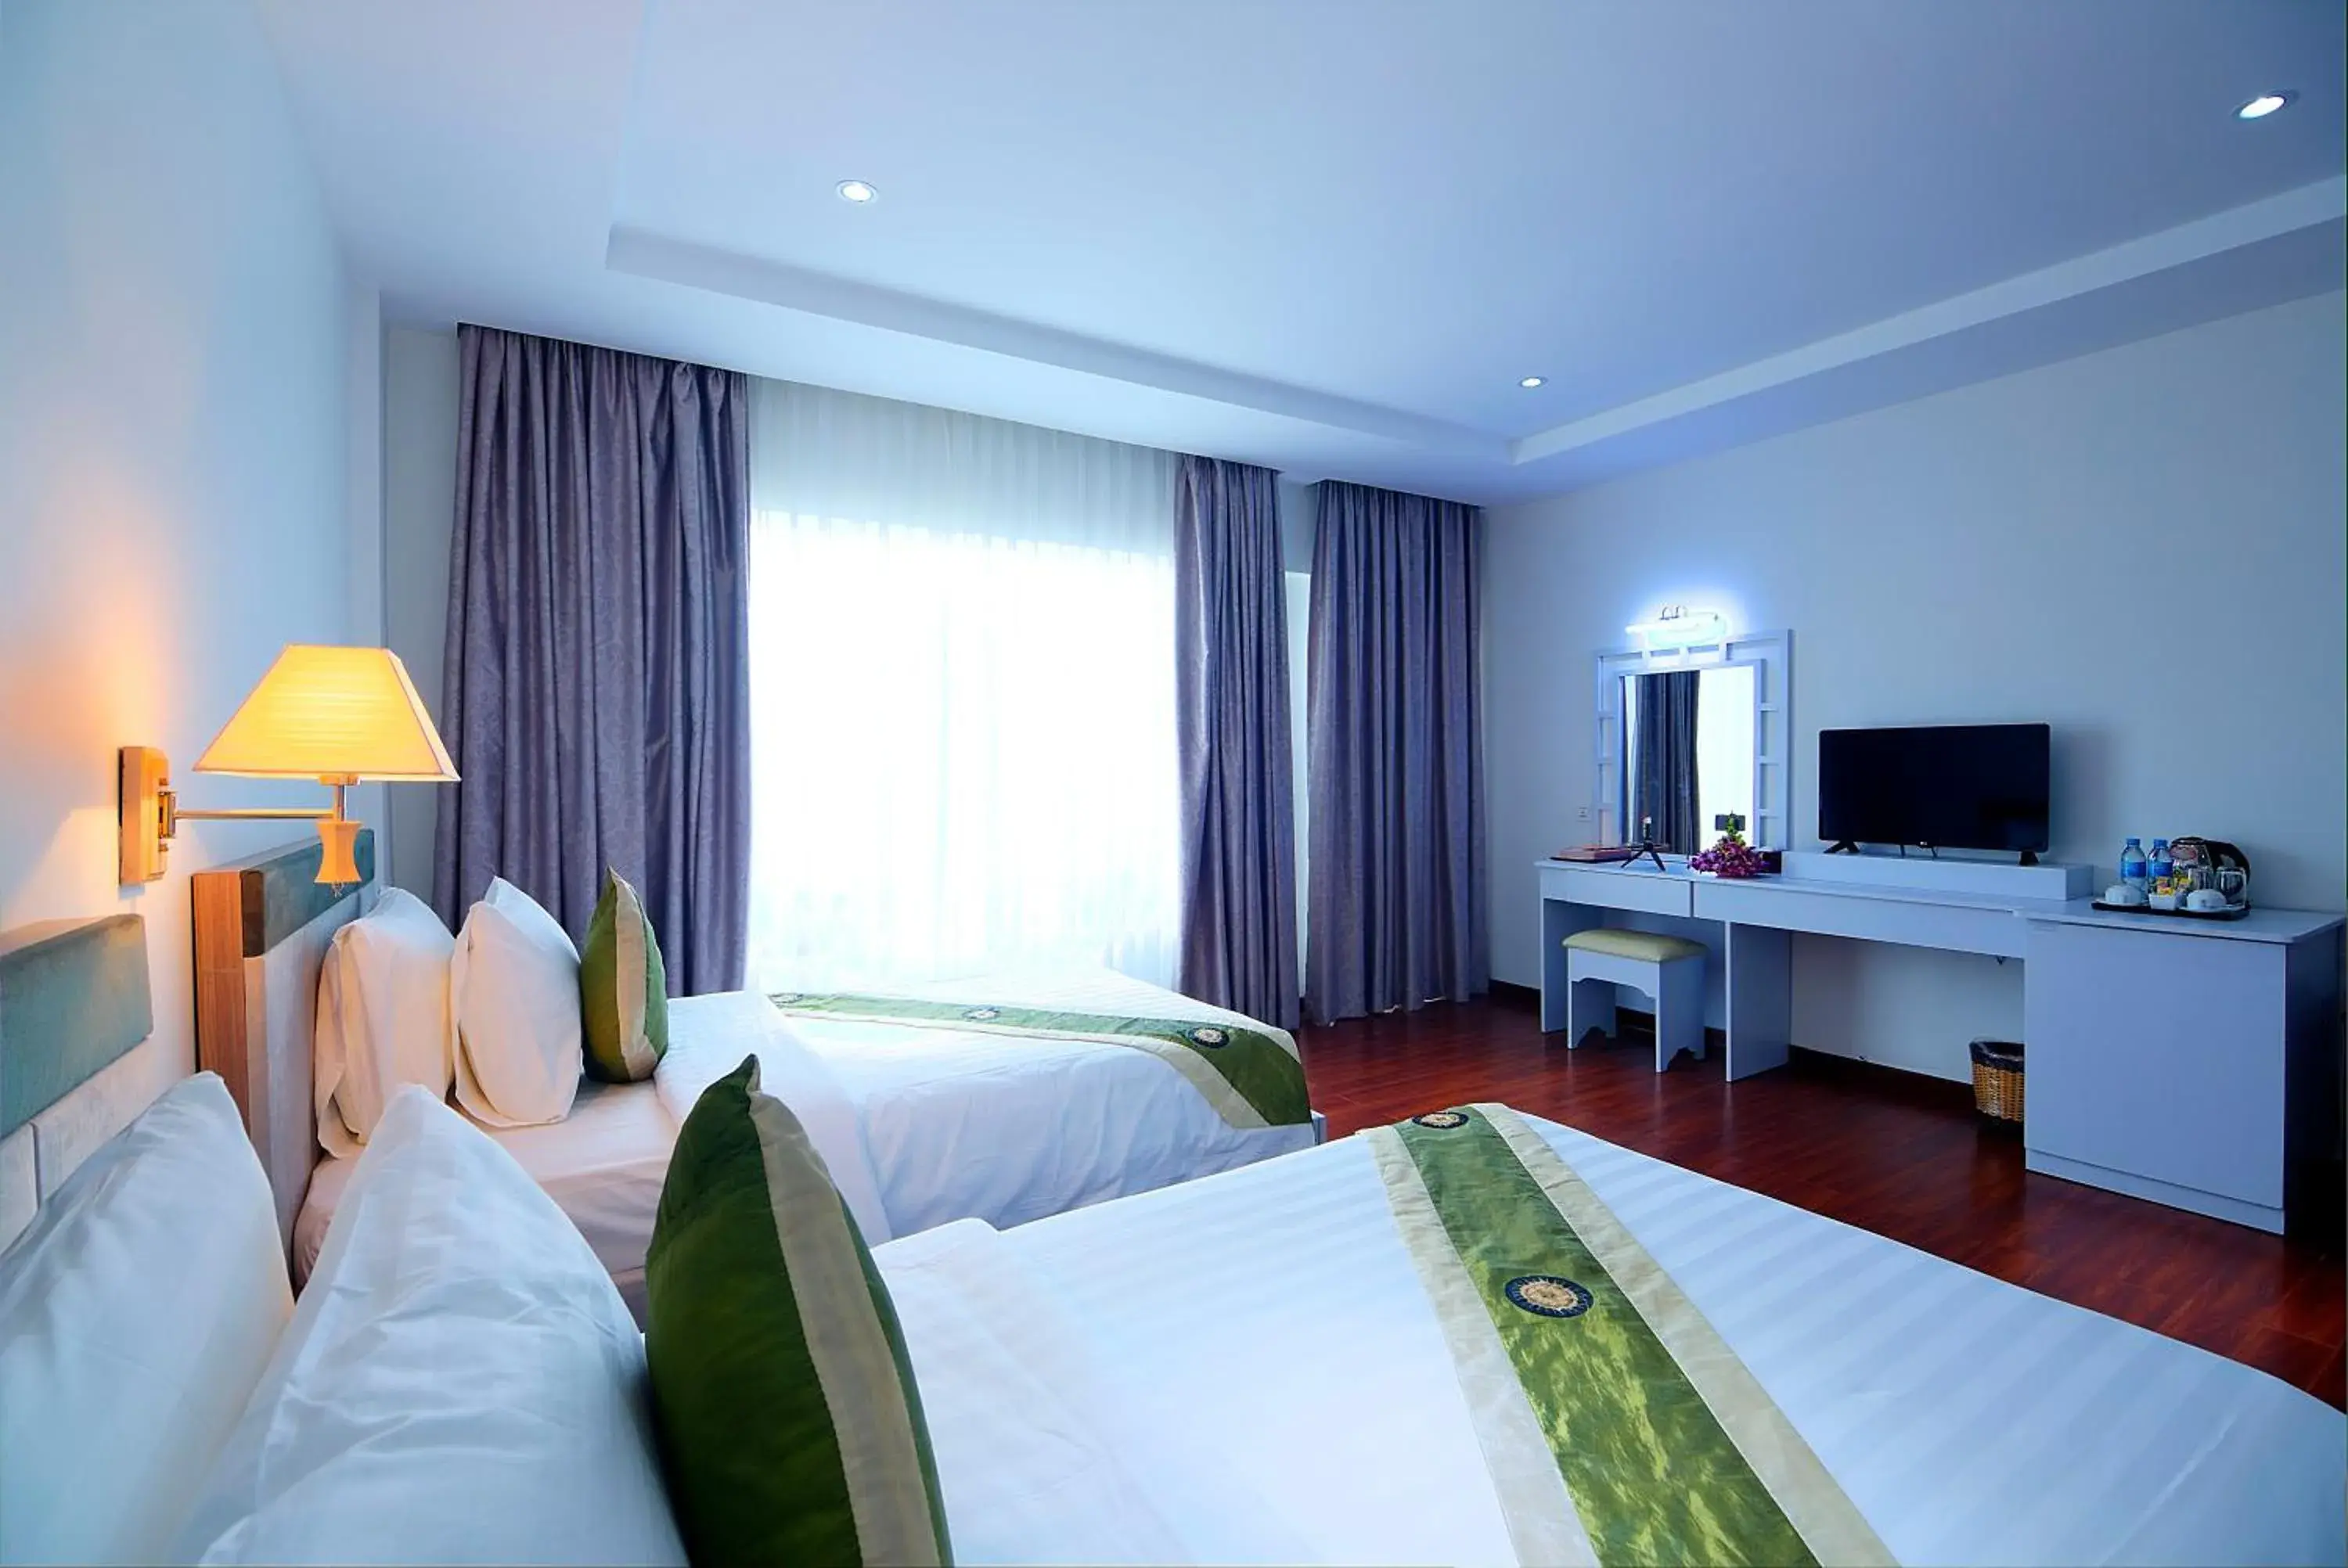 Bedroom, Room Photo in Starry Angkor Hotel